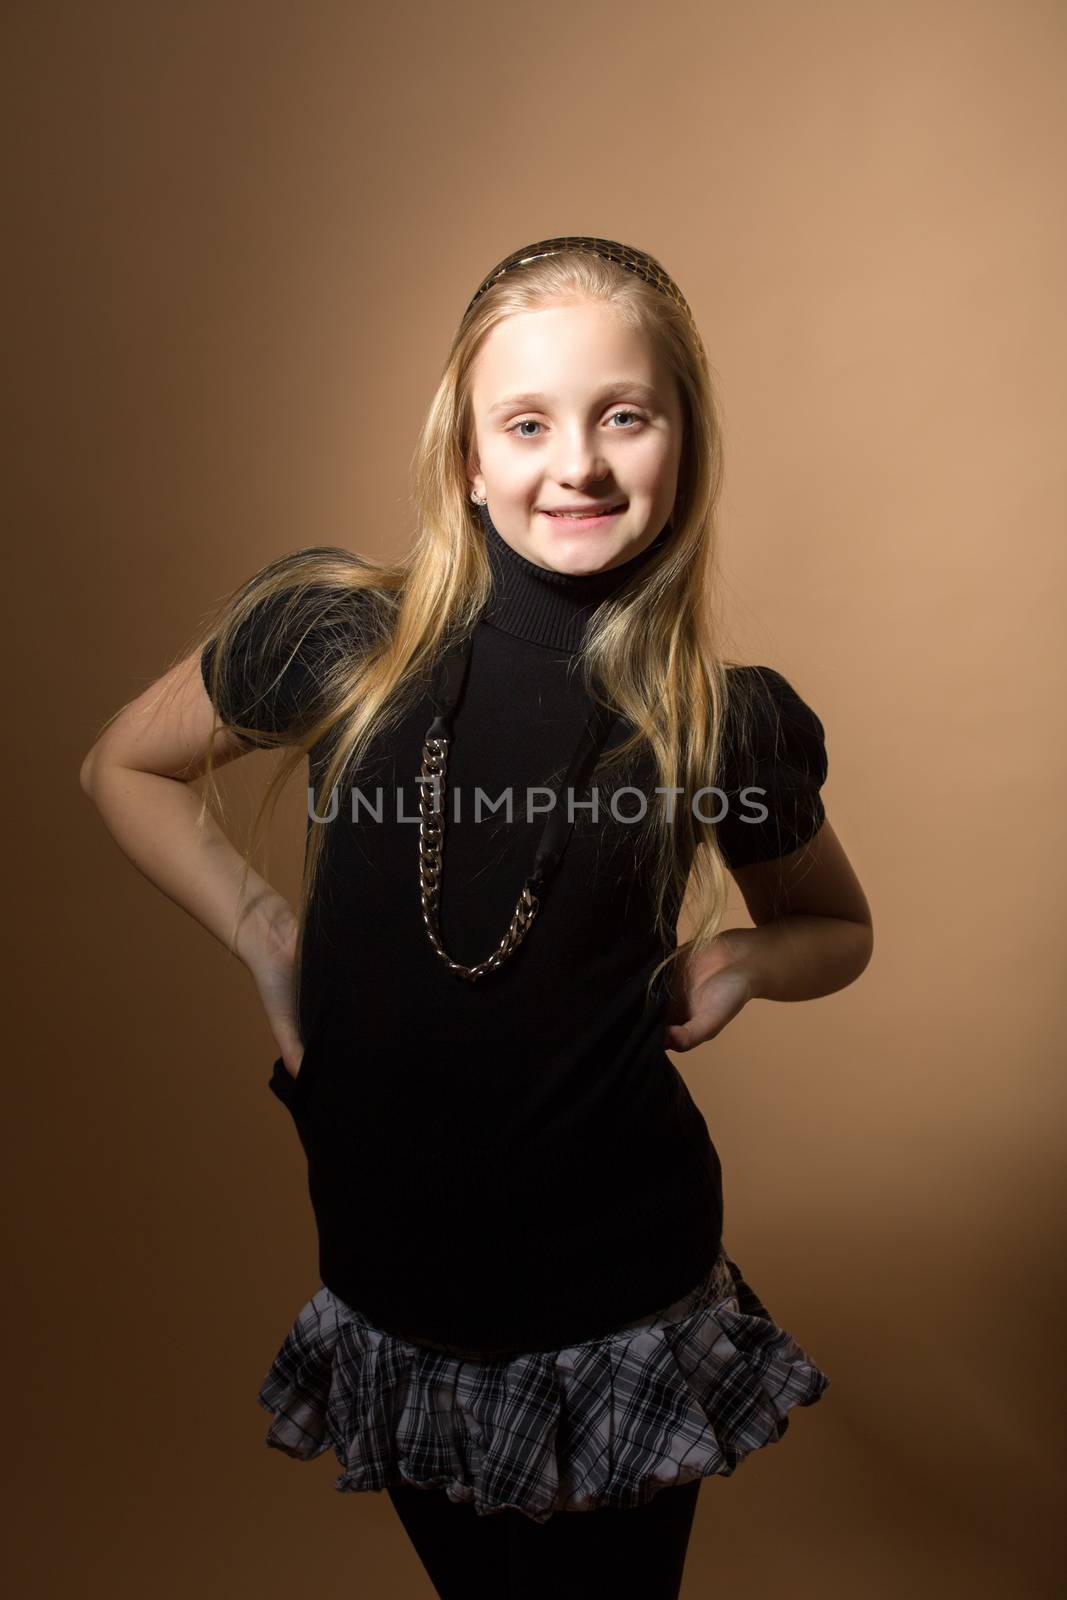 Fashion smiley european little girl posing by artush